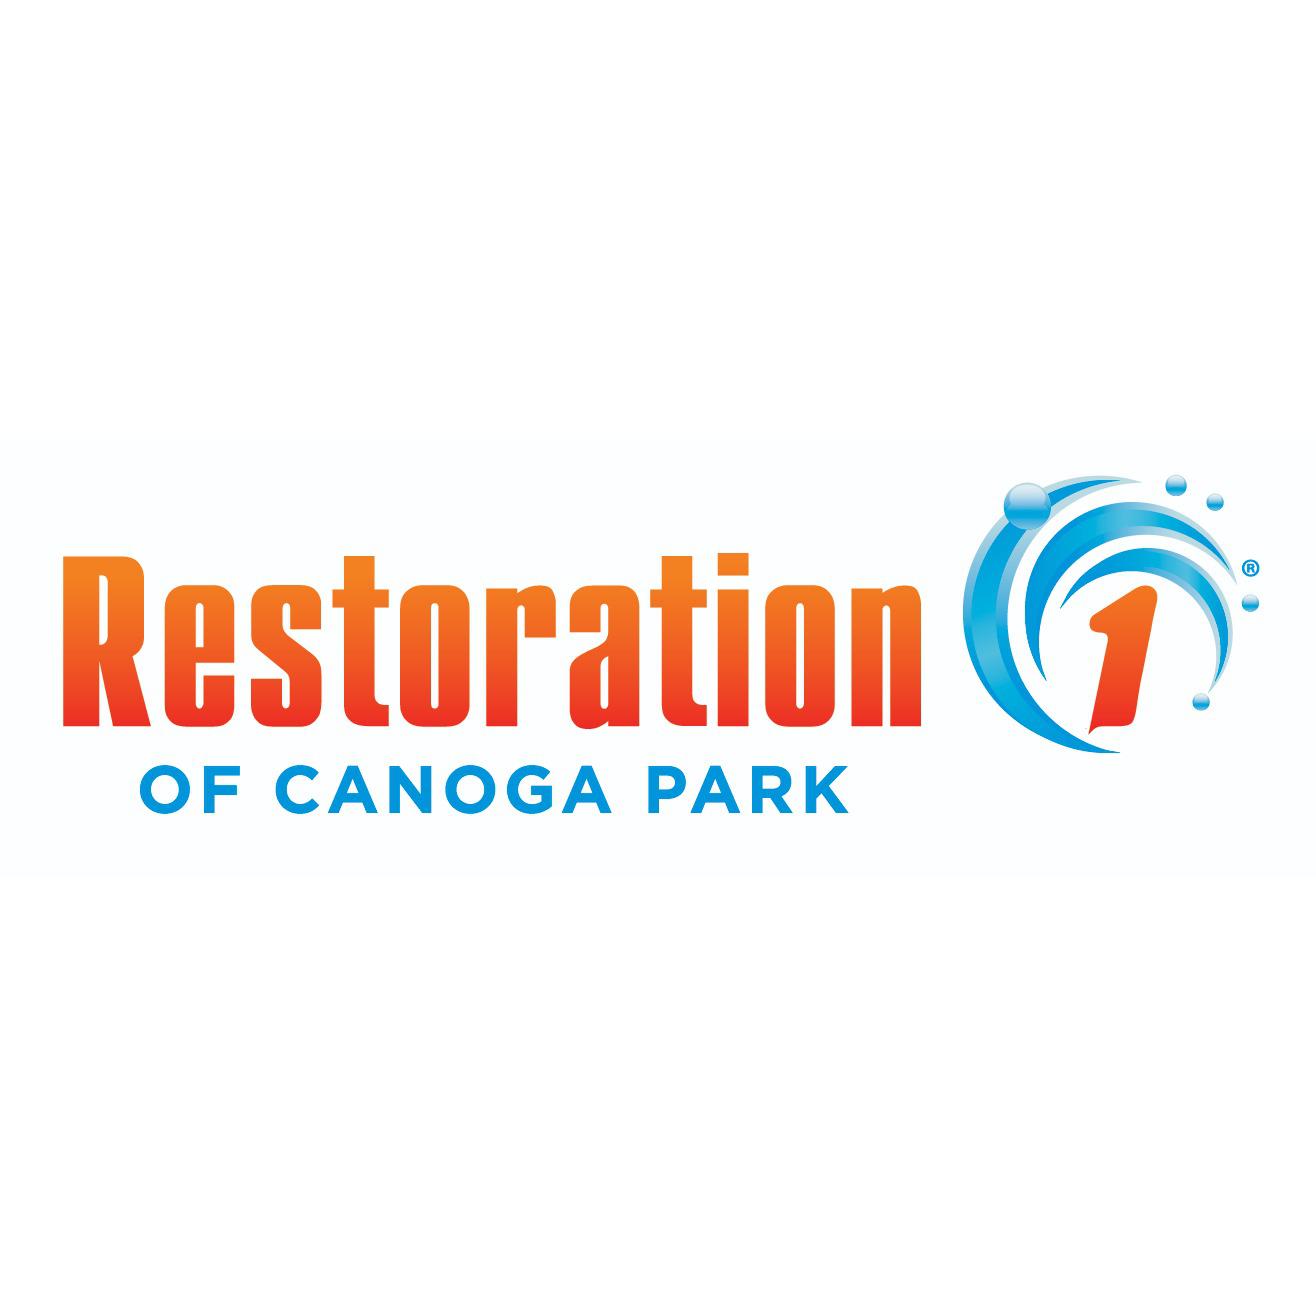 Restoration 1 of Canoga Park